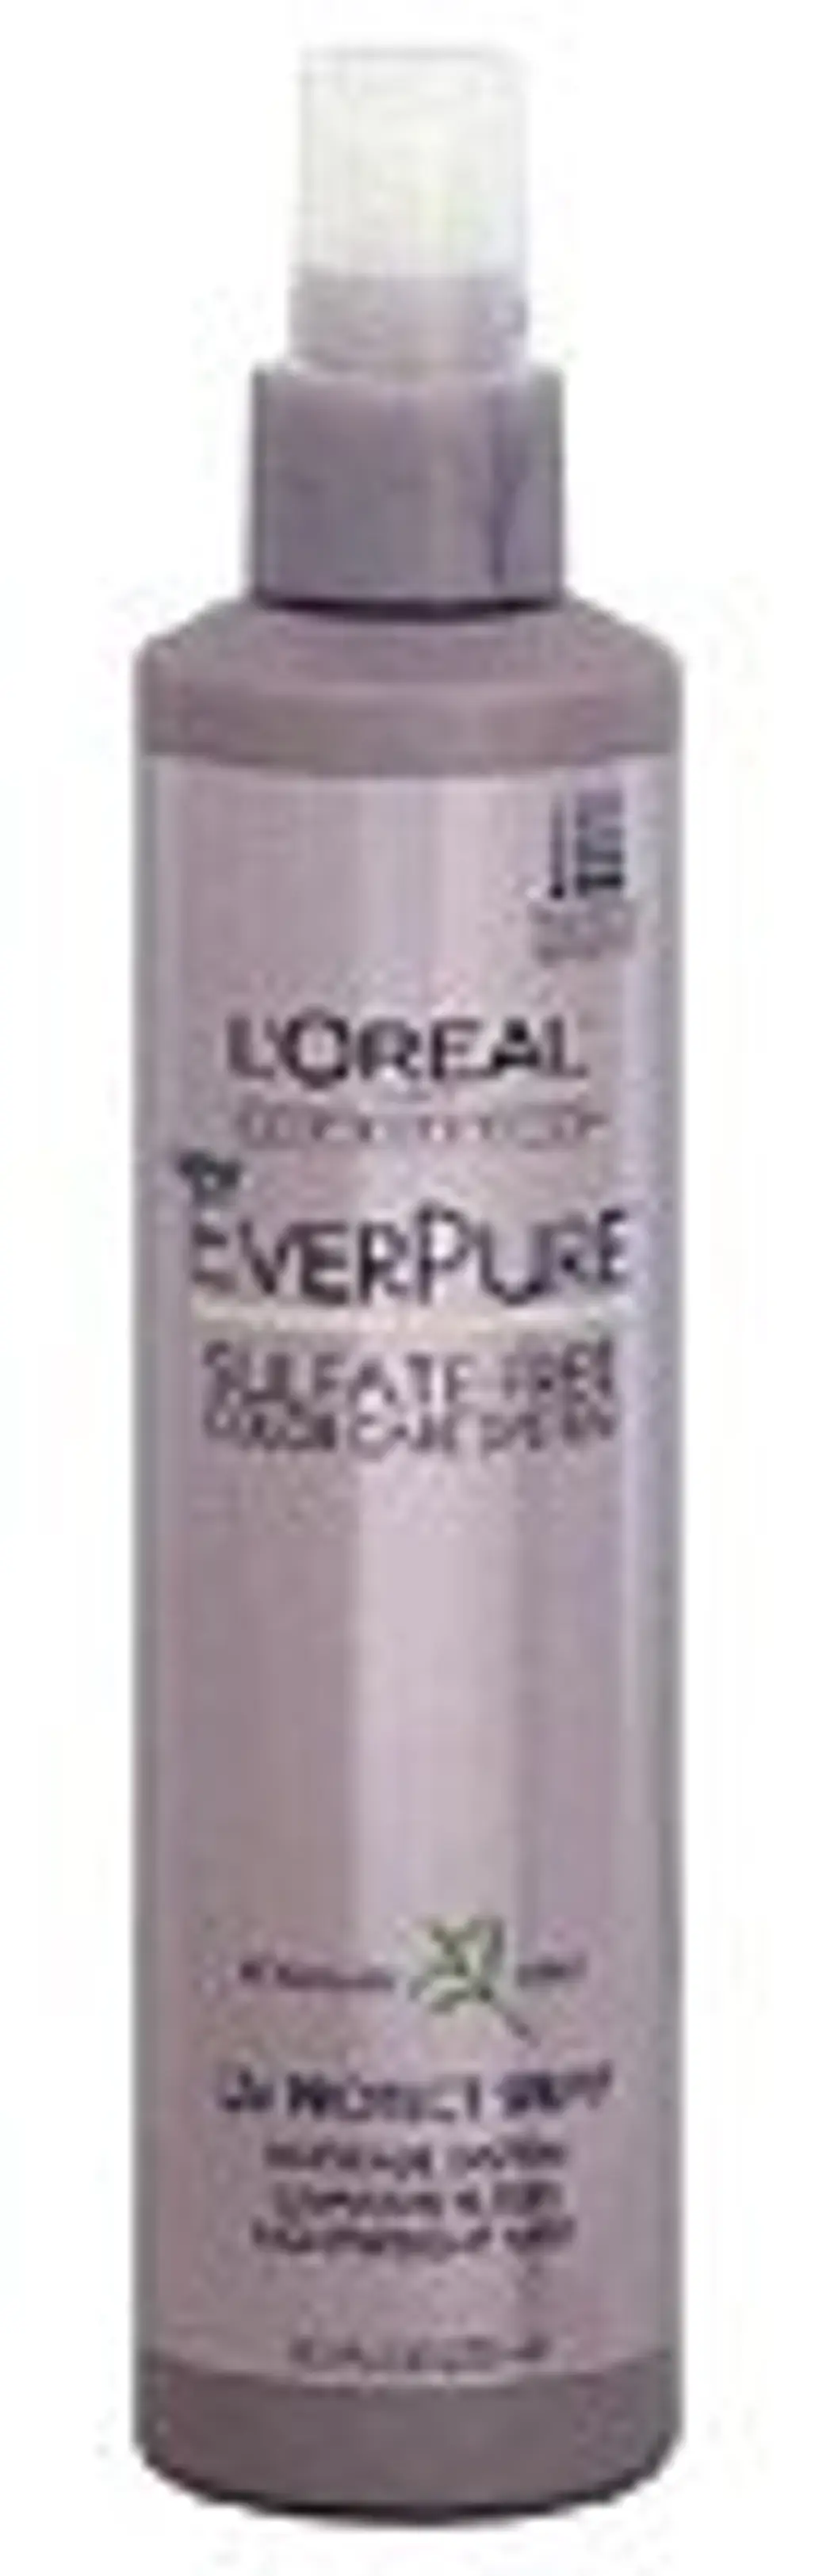 L’Oreal EverPure Spray